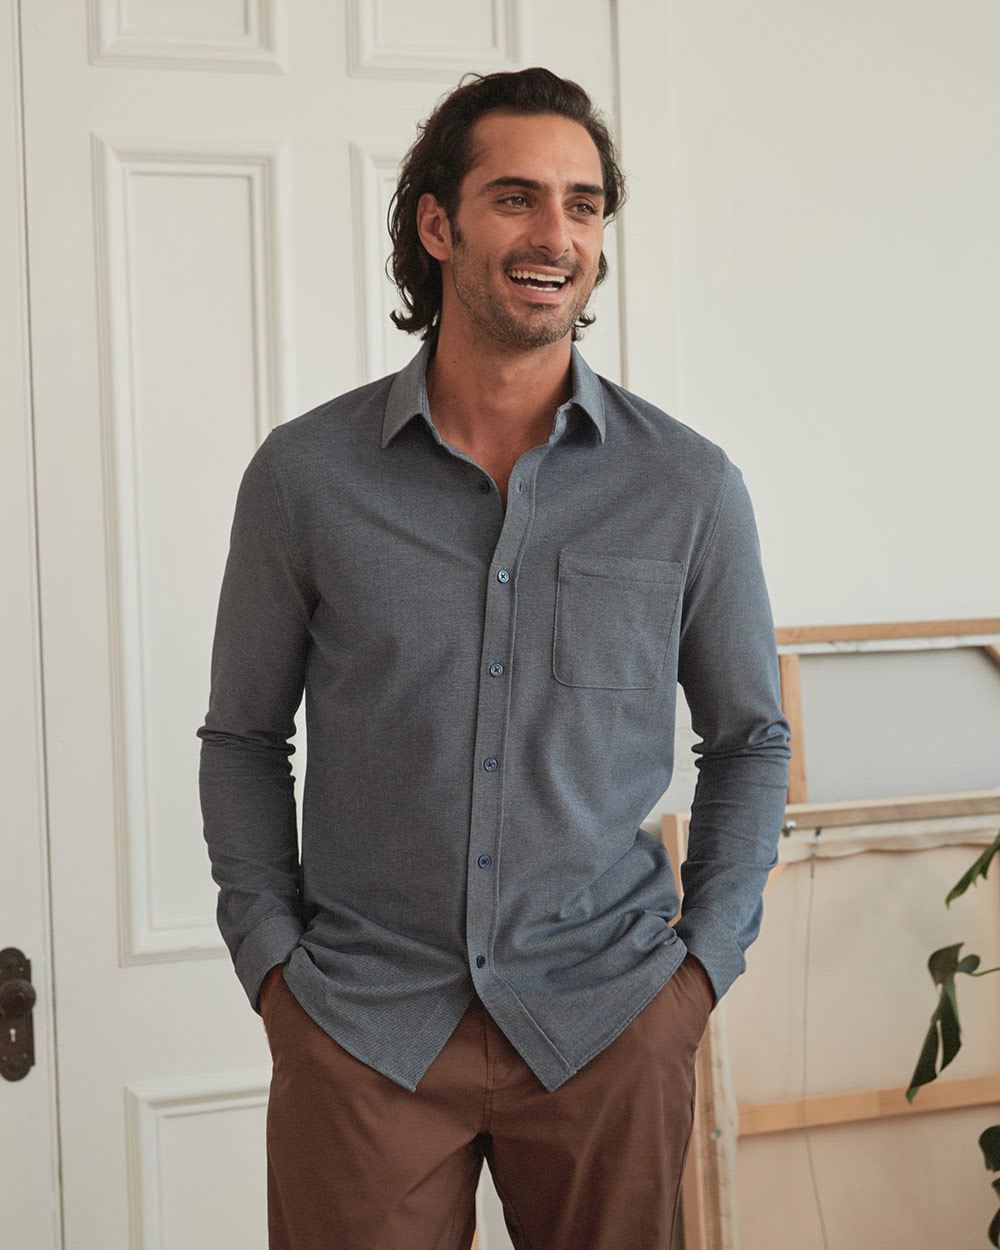 Long-Sleeve Knitted Shirt